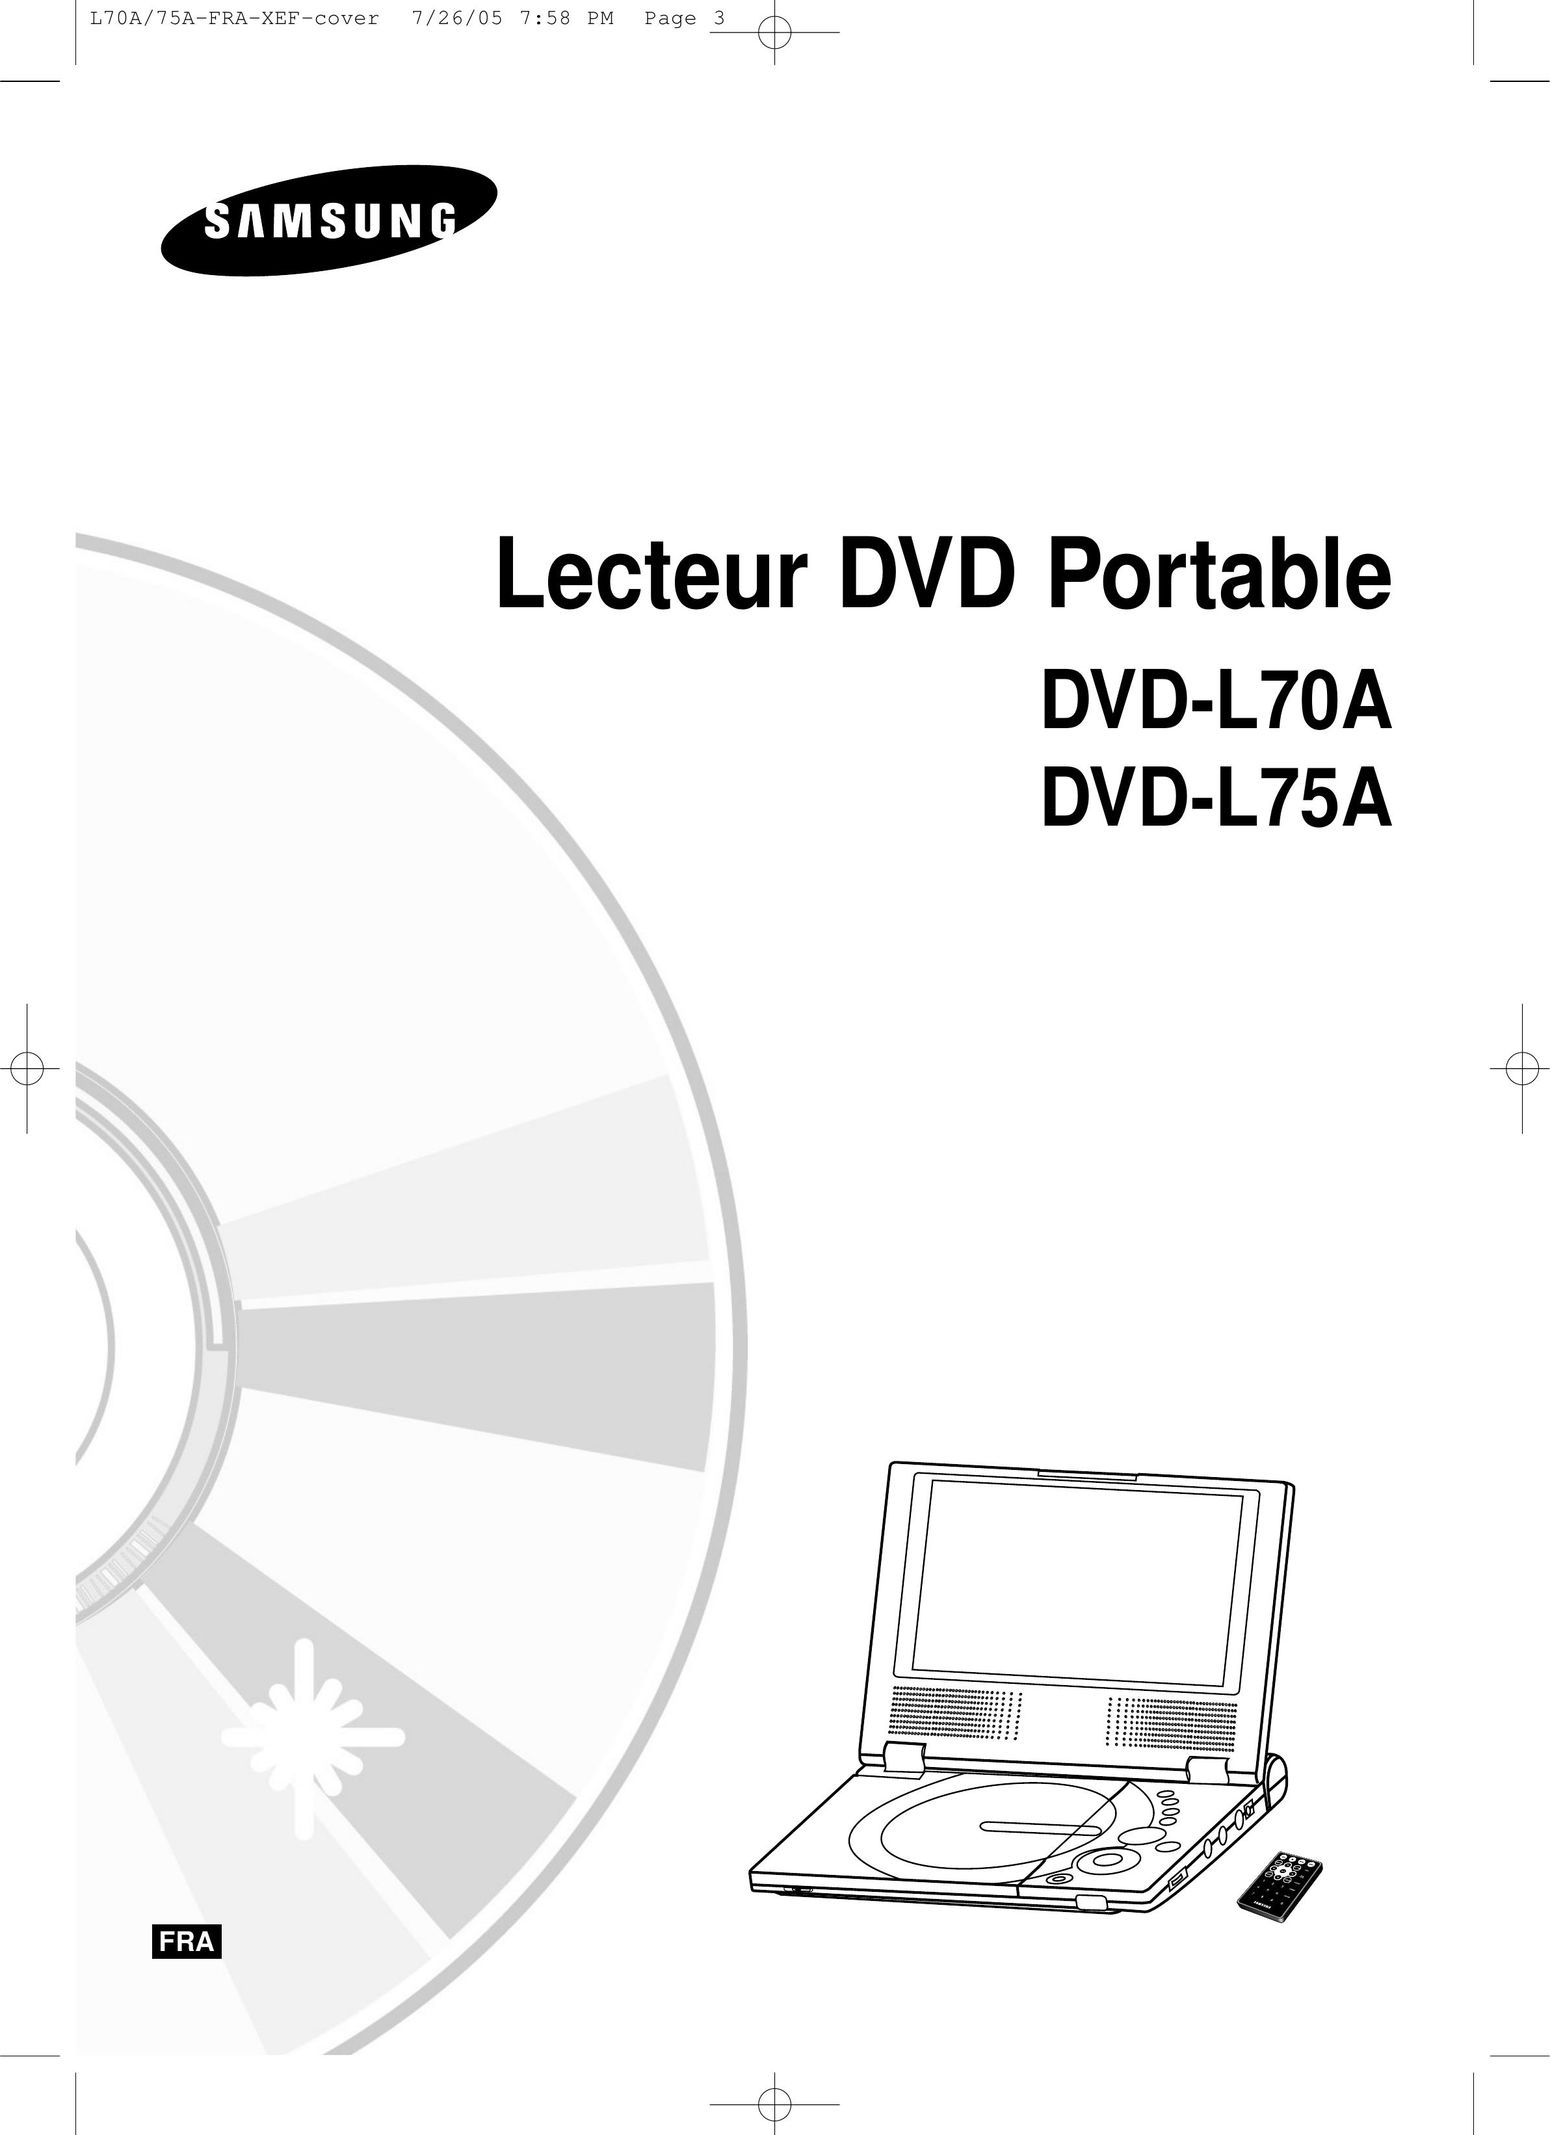 Samsung DVD-L75A Portable DVD Player User Manual